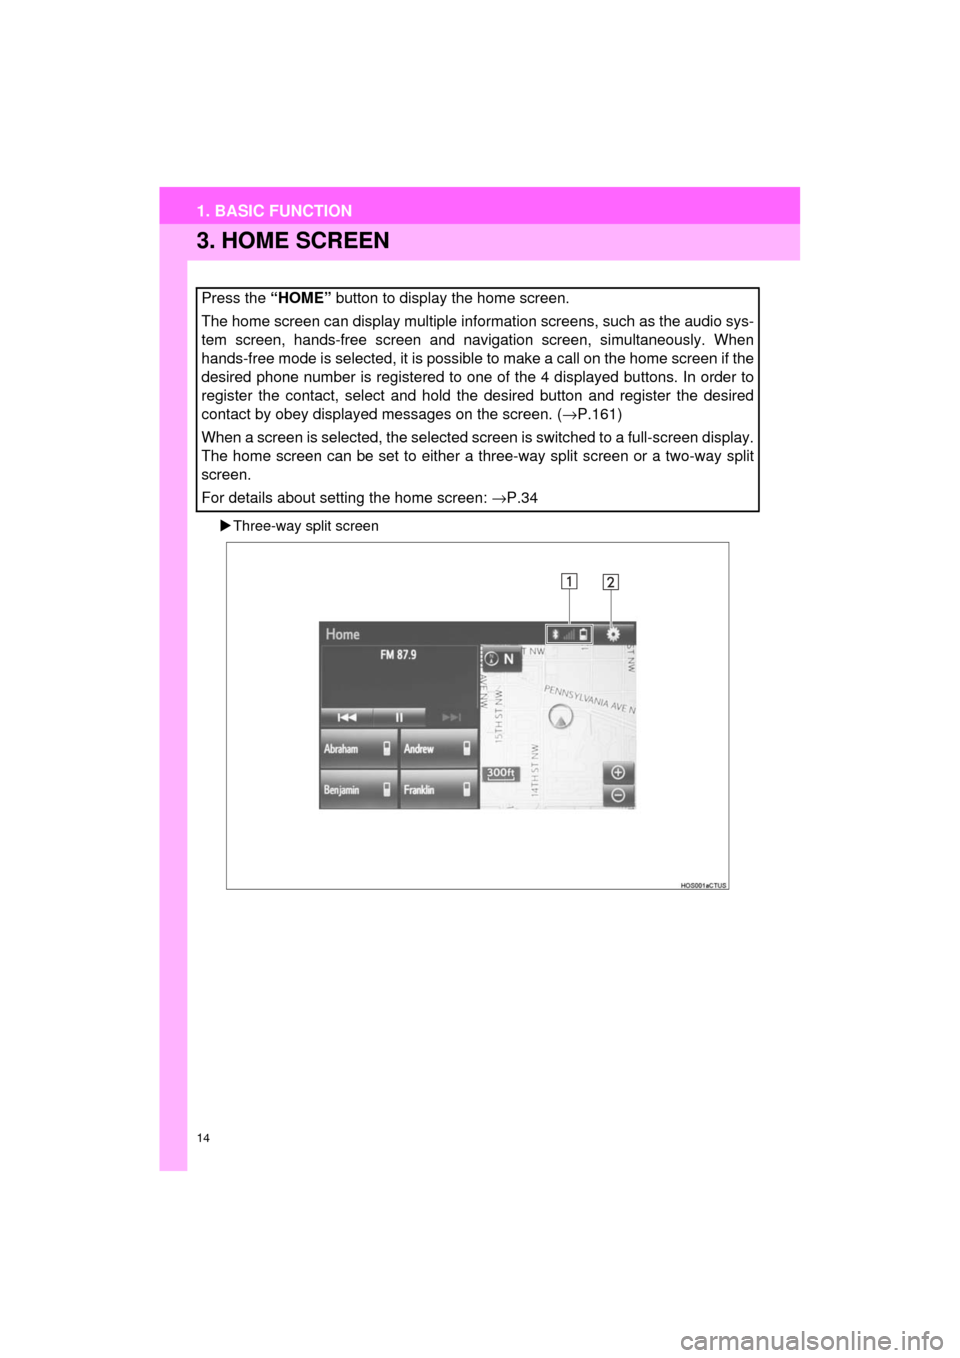 TOYOTA PRIUS C 2017 NHP10 / 1.G Navigation Manual 14
1. BASIC FUNCTION
Prius_C_Navi_U
3. HOME SCREEN
Three-way split screen
Press the “HOME”  button to display the home screen.
The home screen can display multiple information screens, such as 